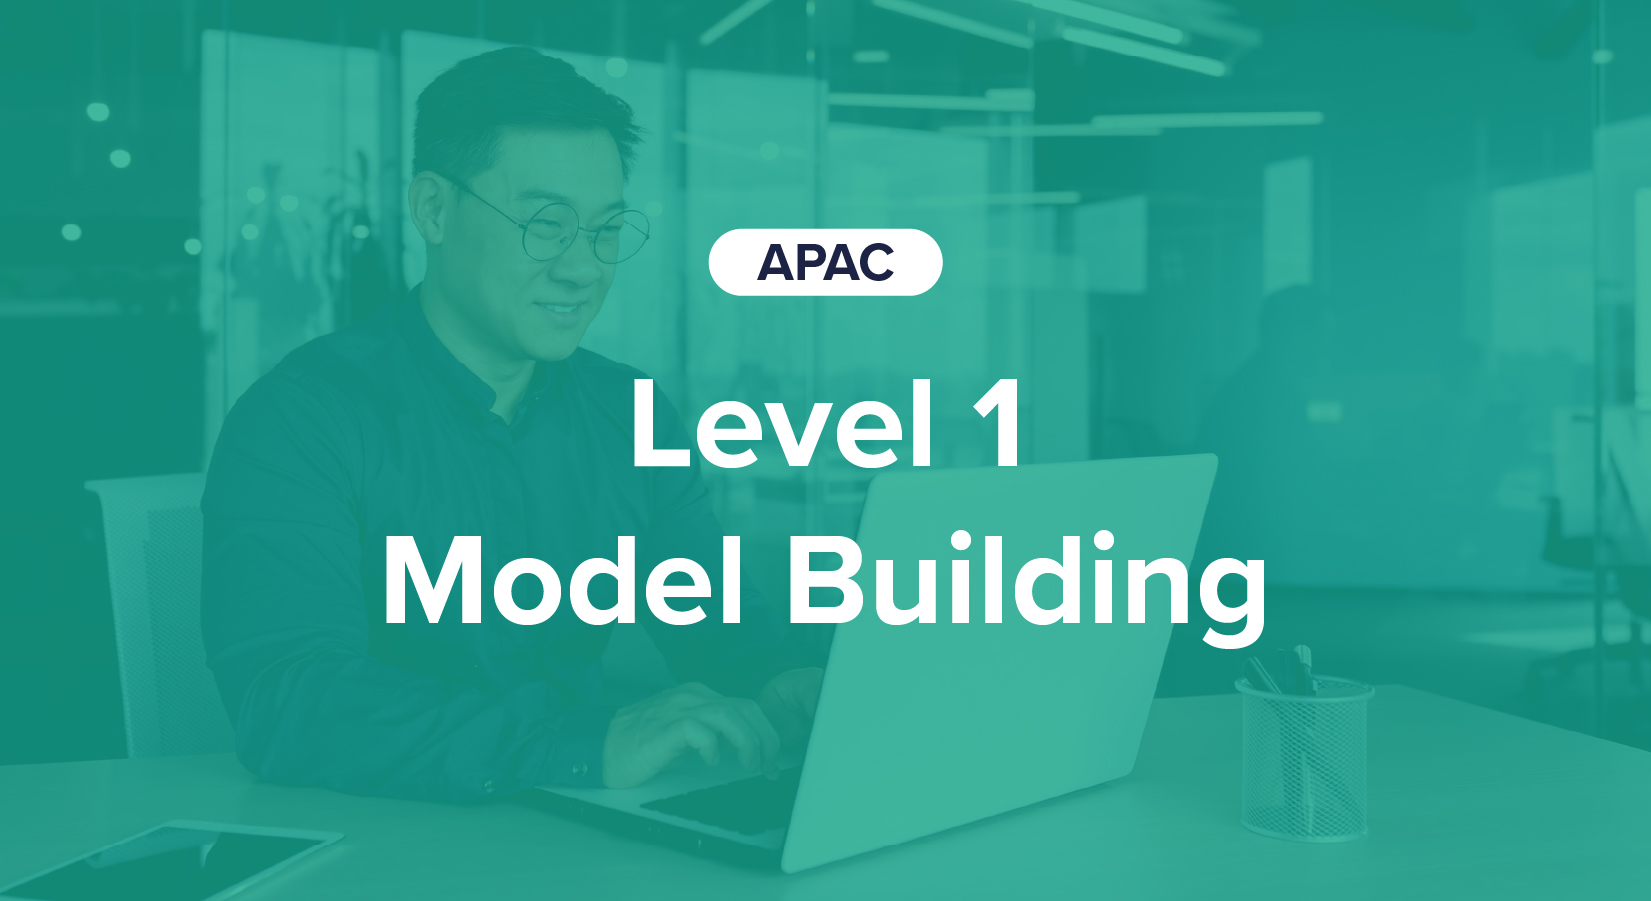 Academy Level 1 Model Building APAC